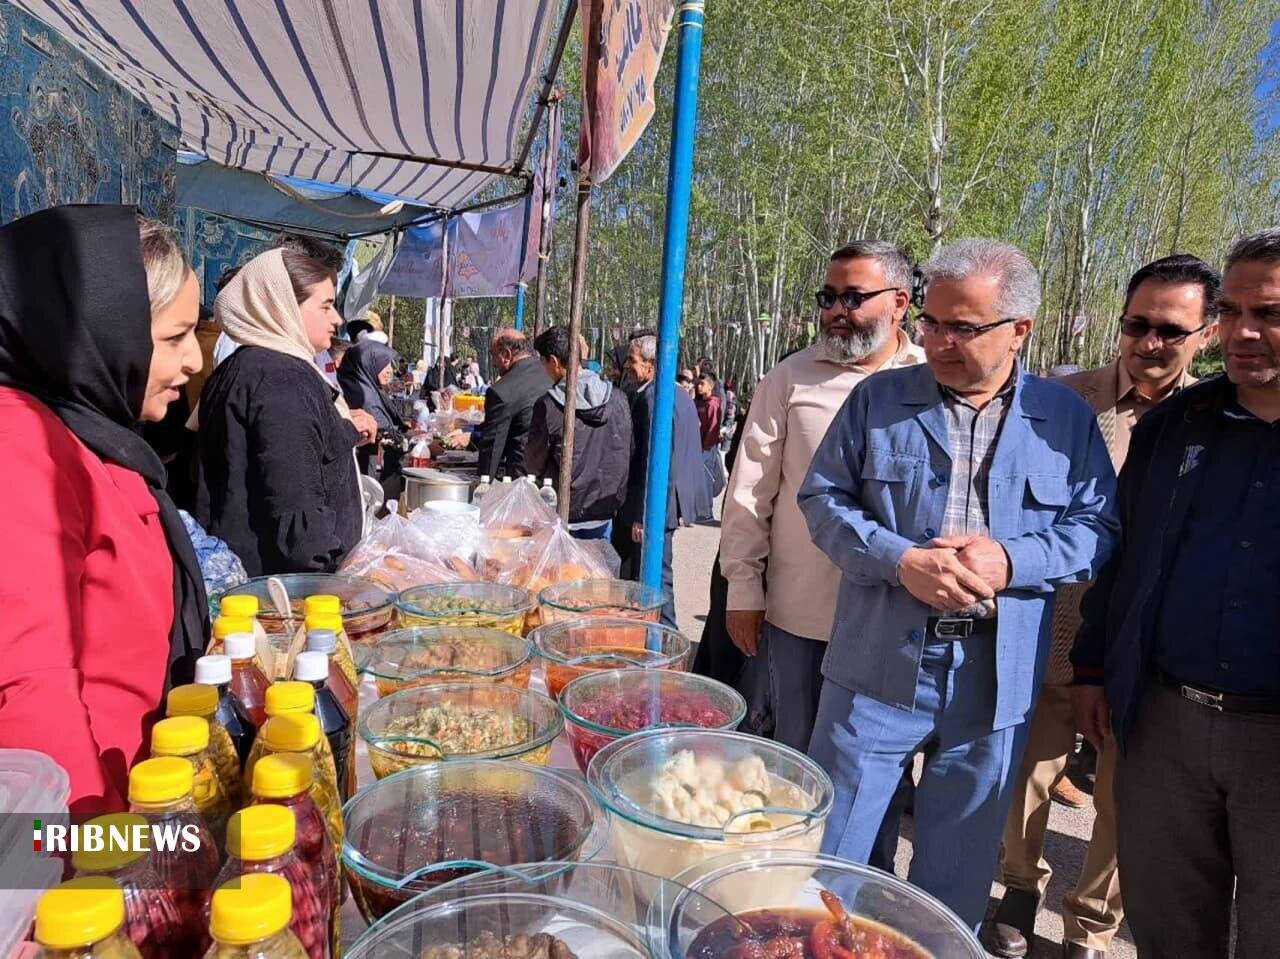 Rhubarb Festival celebrates Kuhsorkh’s neighborhood merchandise, crafts